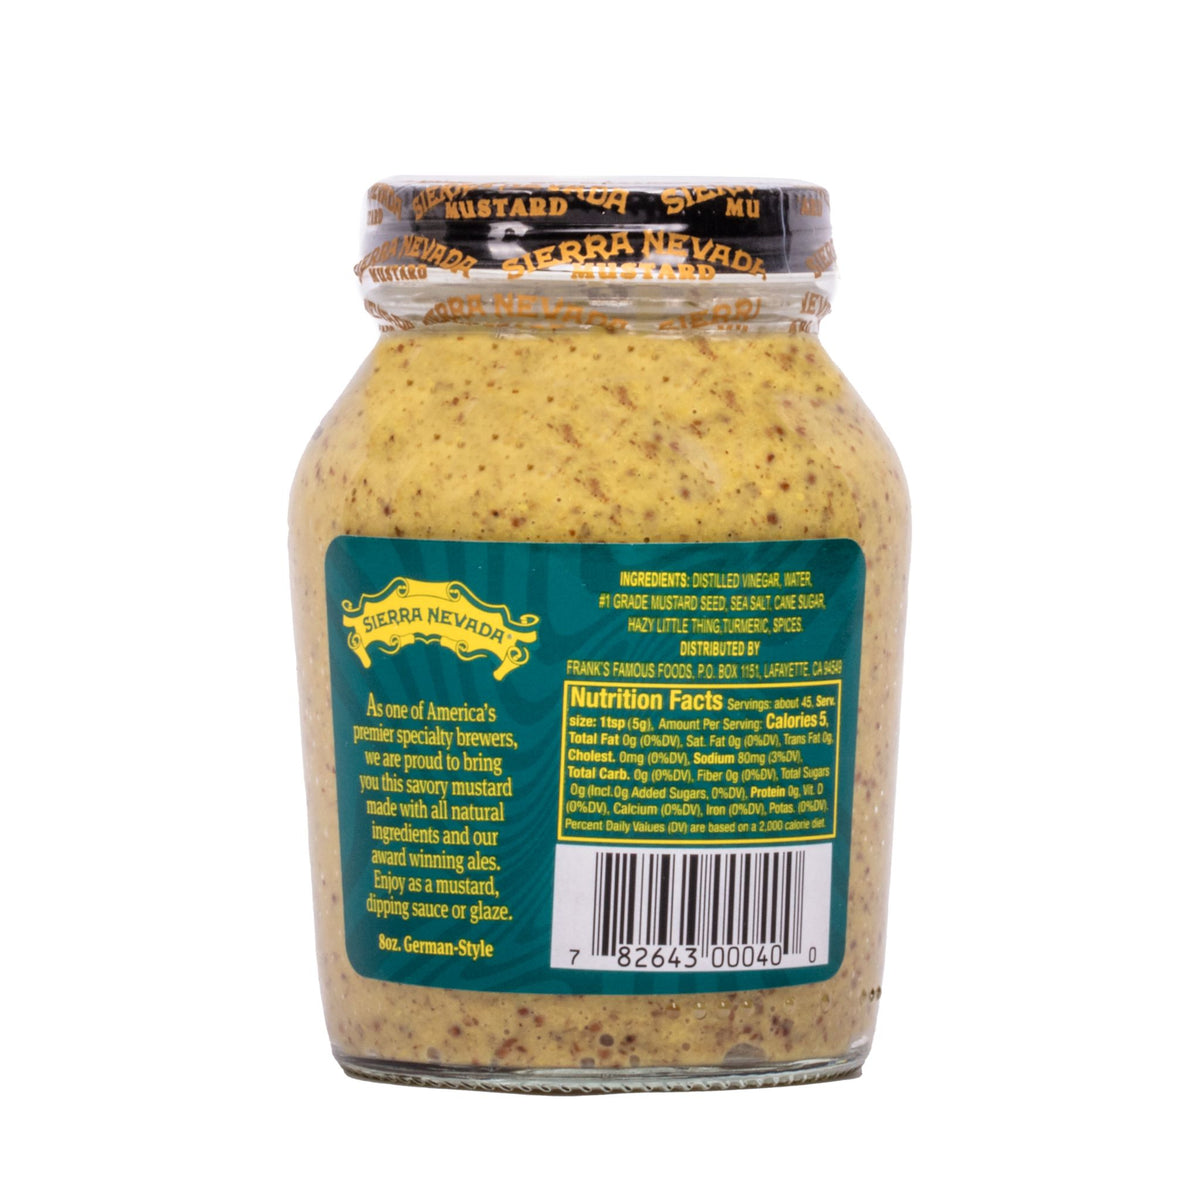 Back label of Sierra Nevada mustard jar